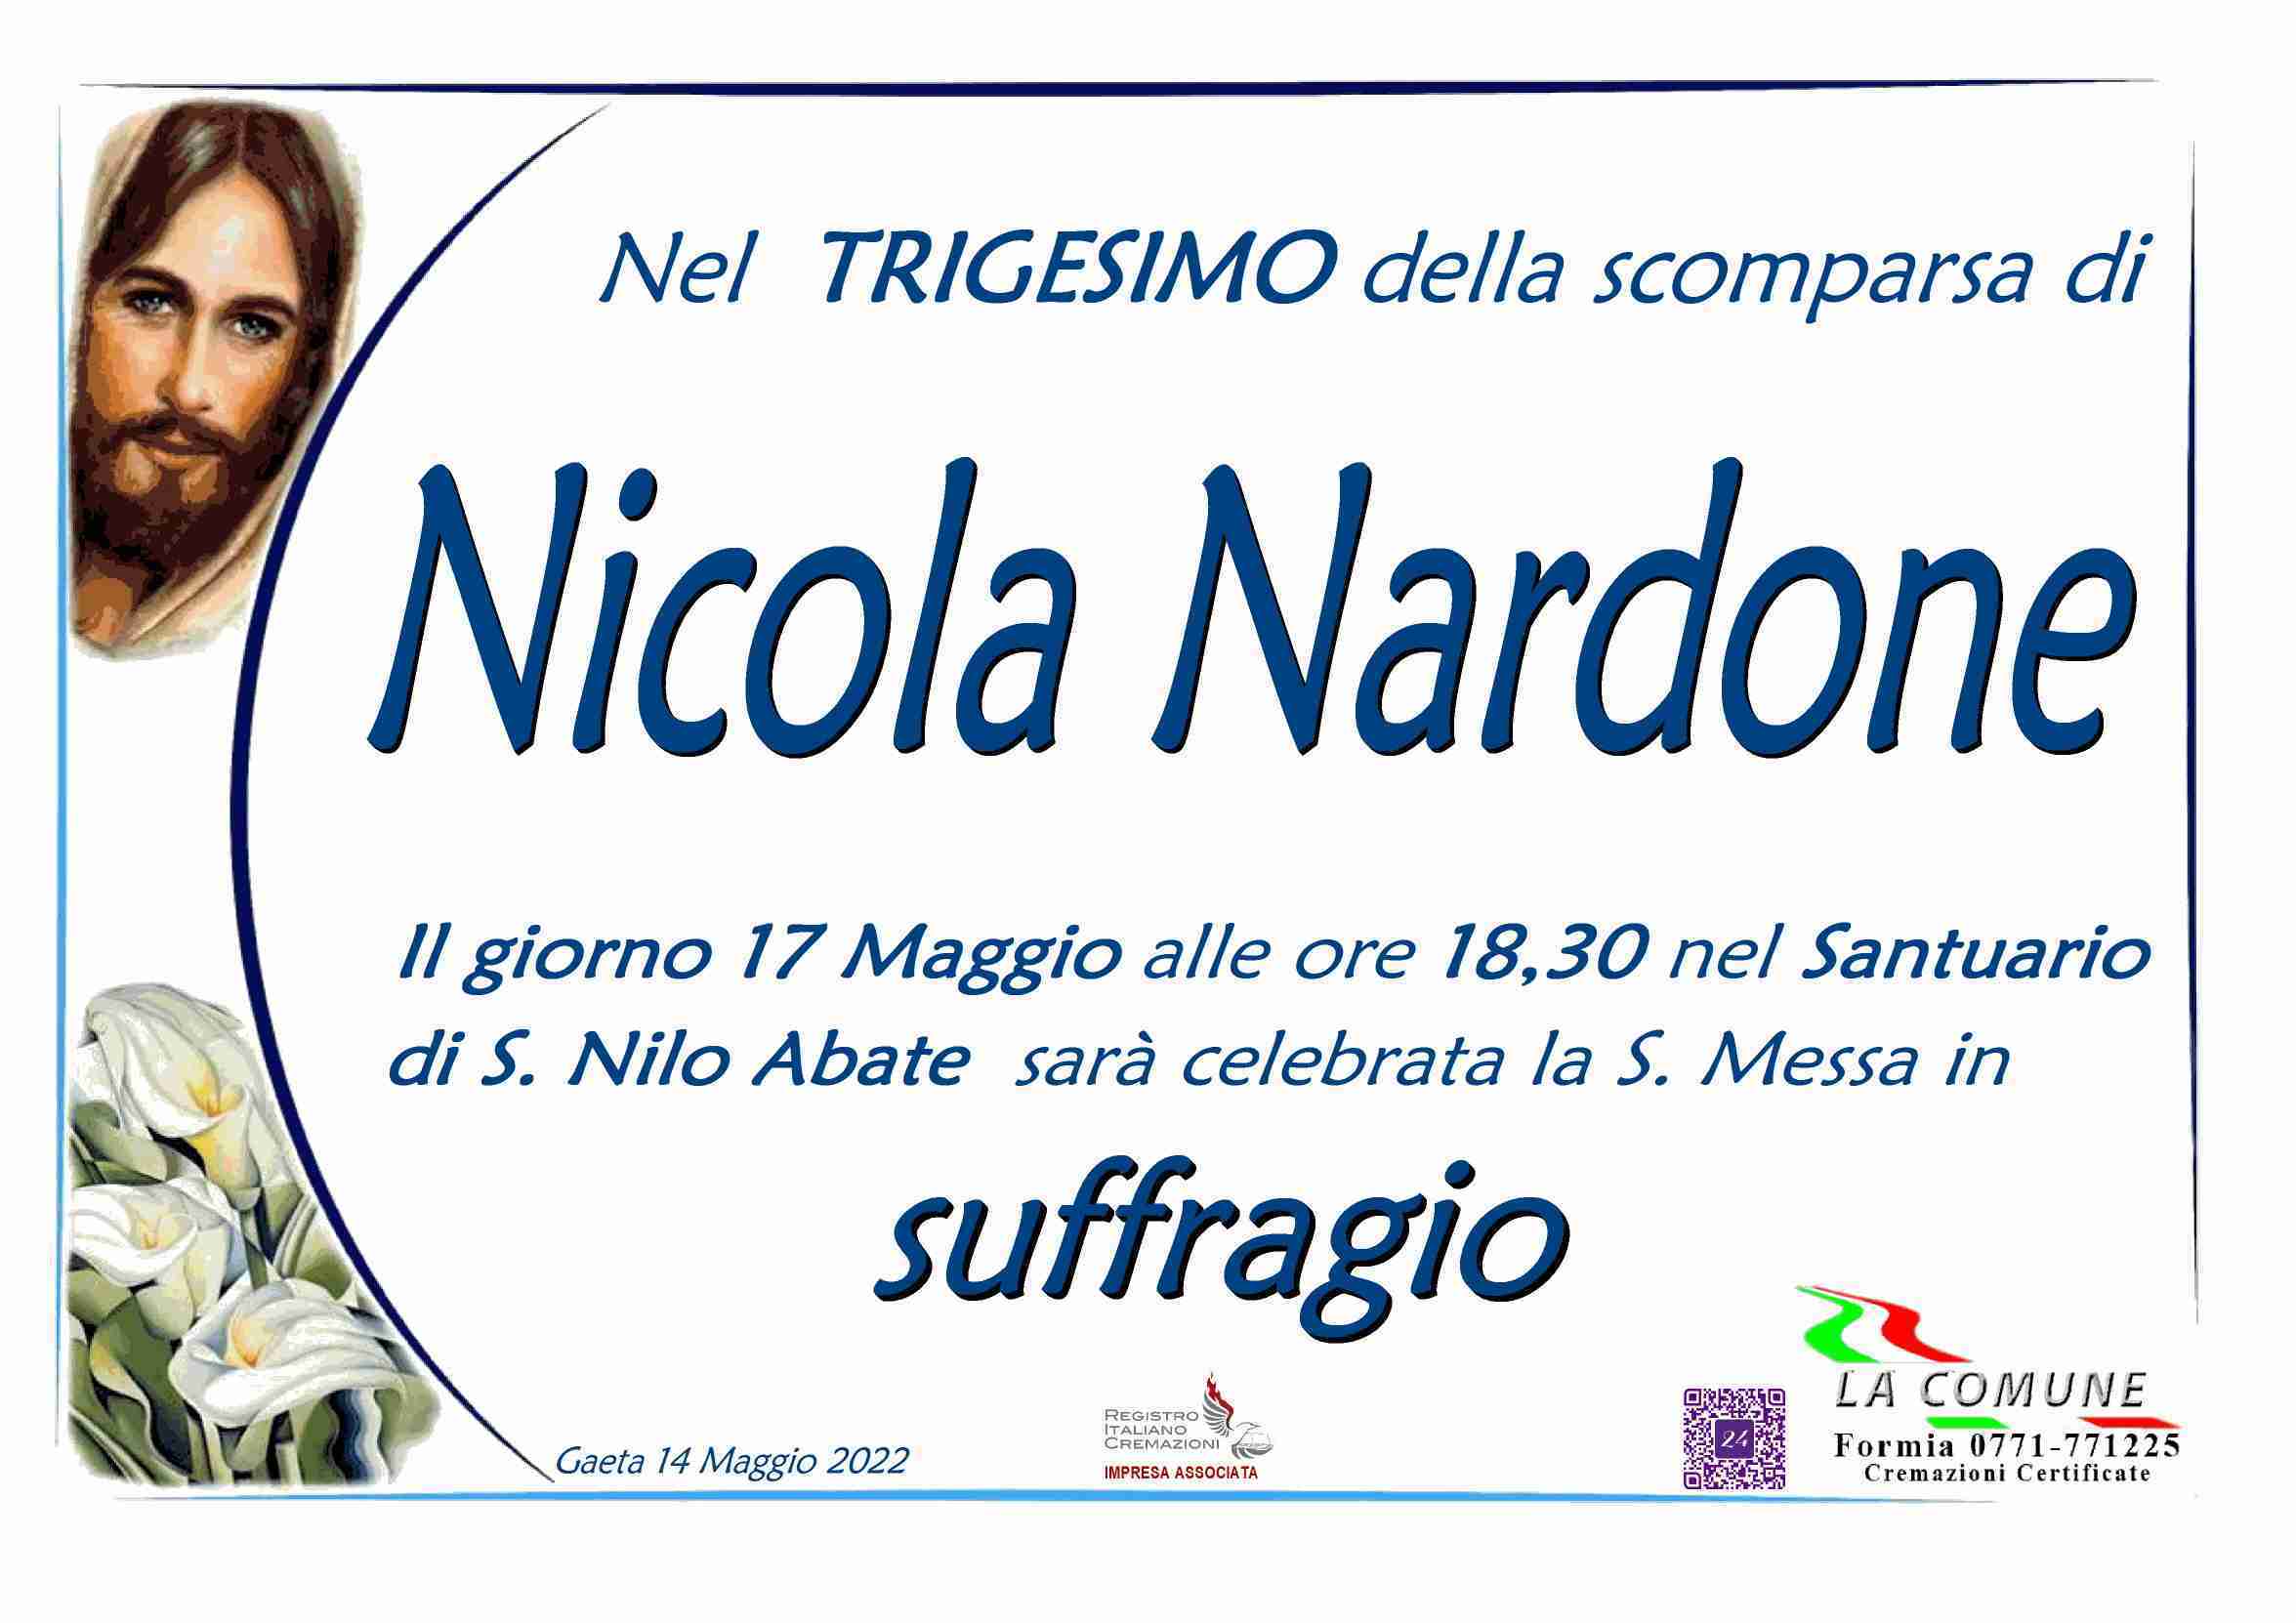 Nicola Nardone